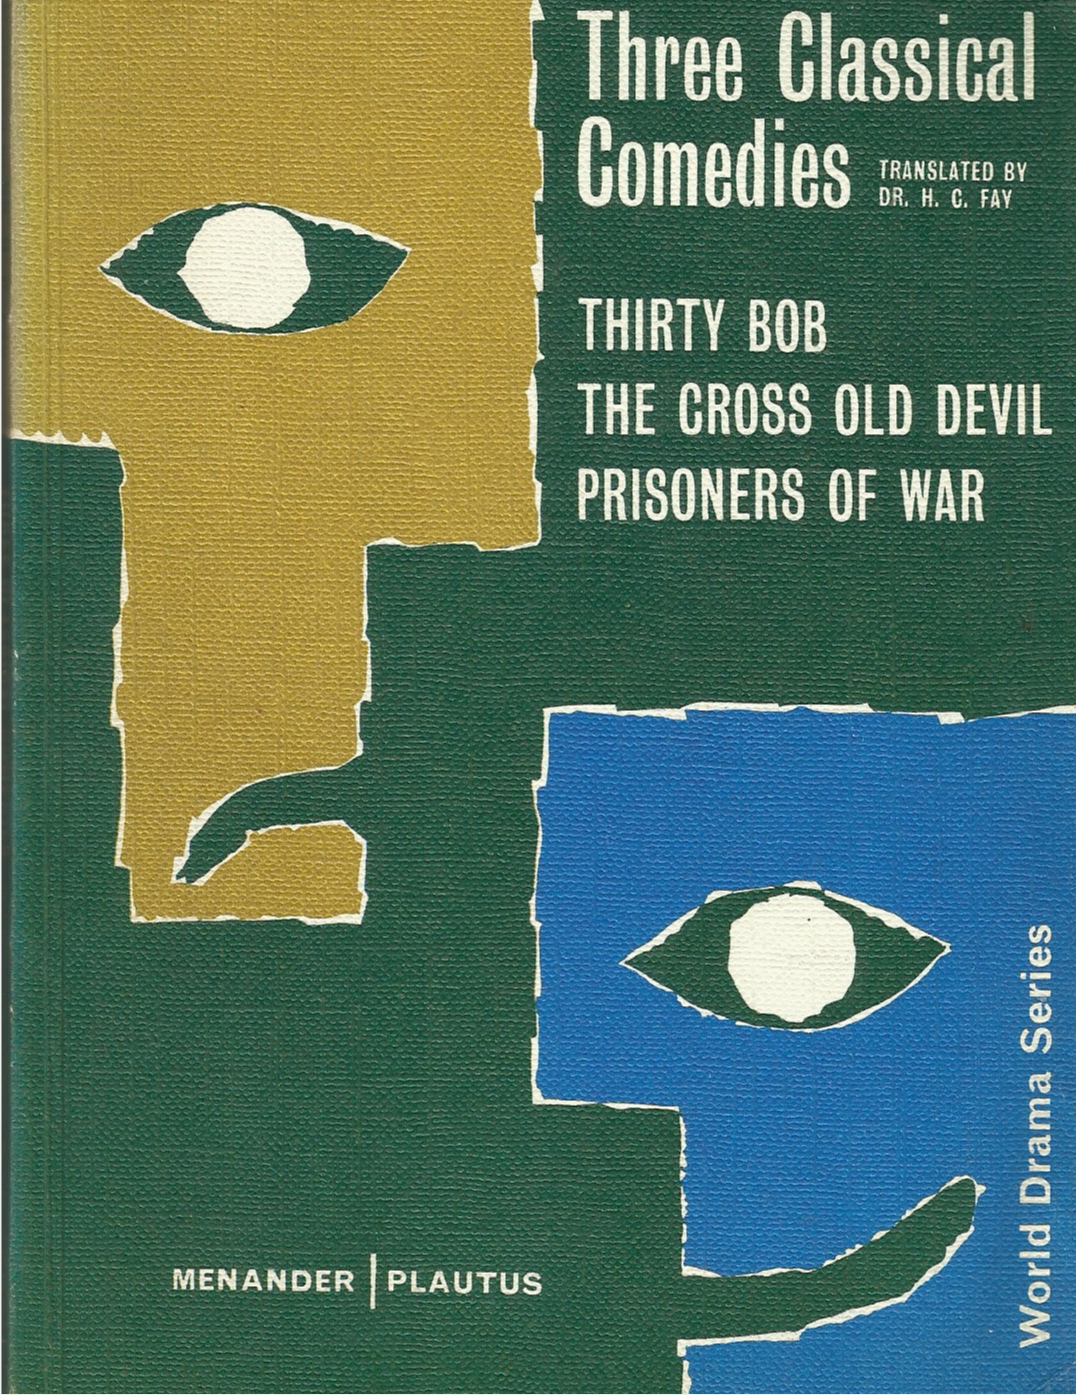 FAY, DR H. G. (TRANSLATOR) - Three Classical Comedies: Thirty Bob / the Cross Old Devil / Prisoners of War